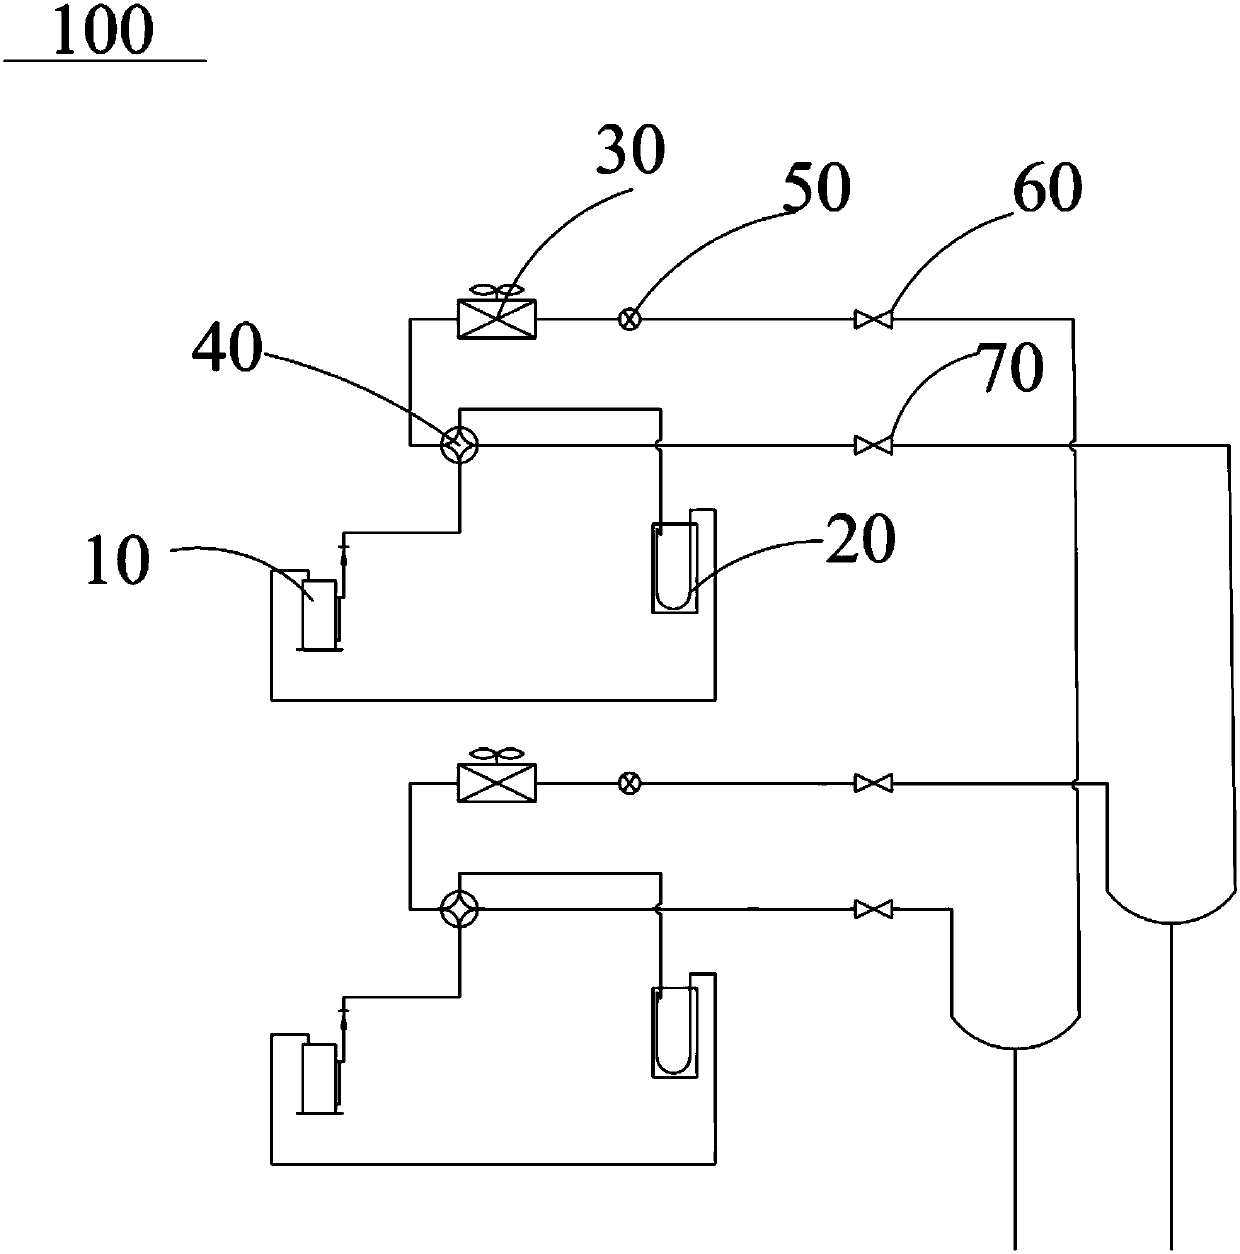 Control method for multi-connected air conditioner, multi-connected air conditioner system and computer readable storage medium